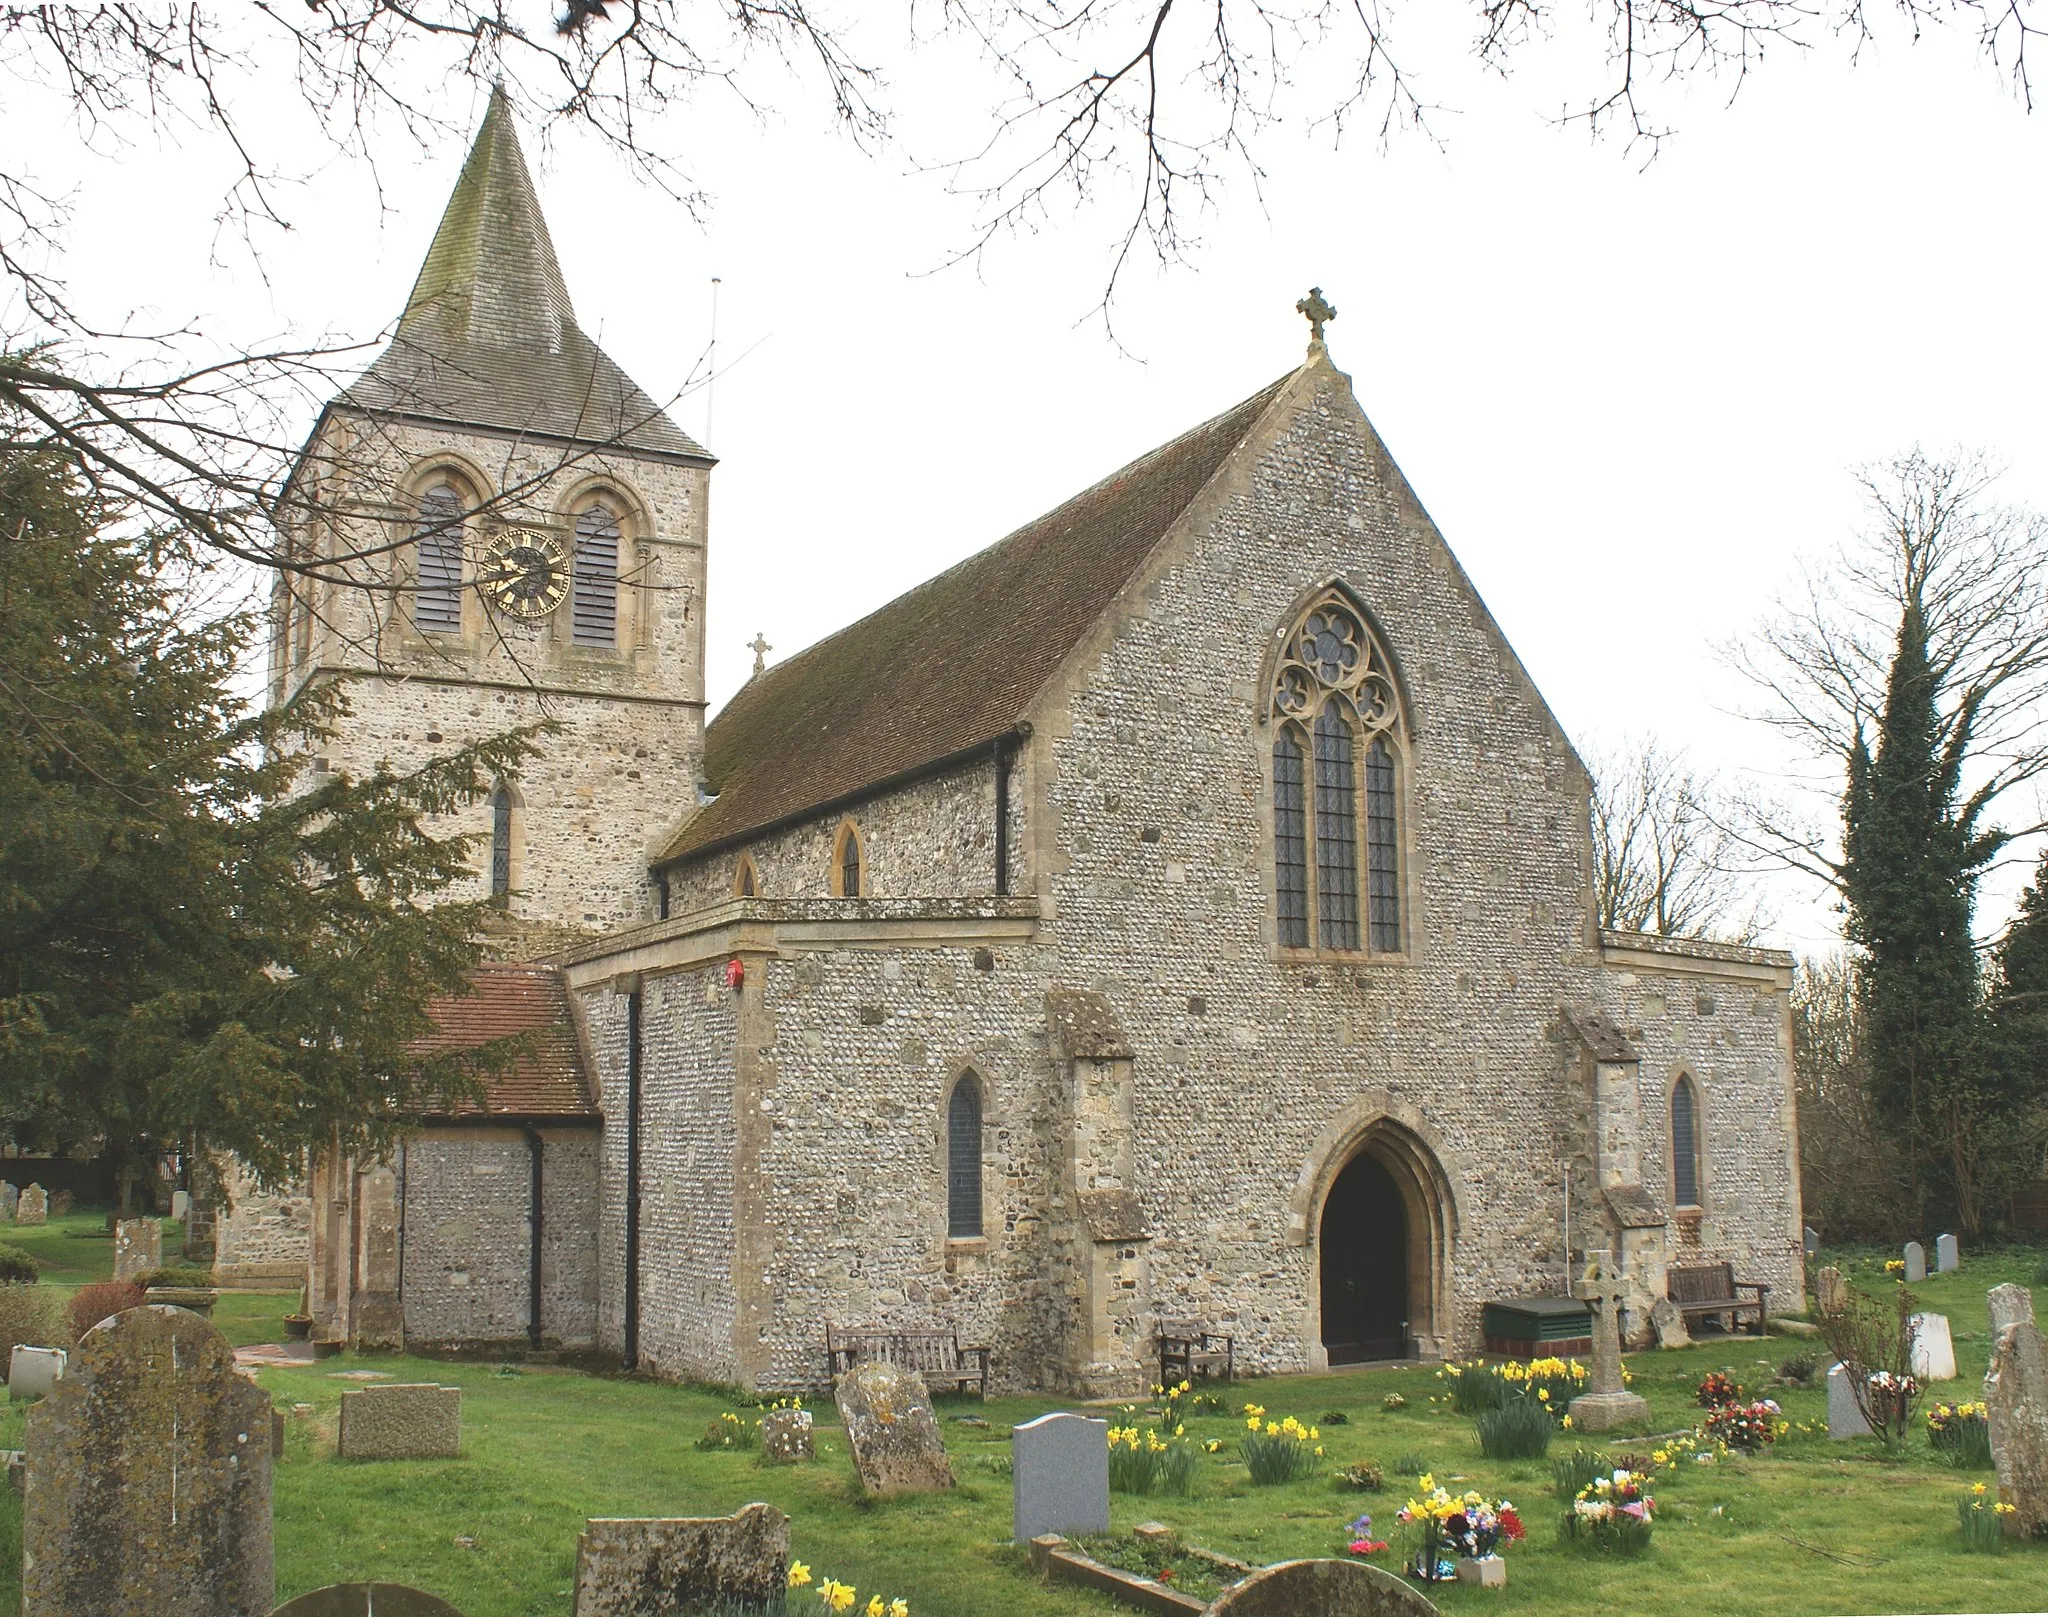 Photo showing: St. Nicolas Church, the Parish Church of Pevensey, England, following recent restoration work.